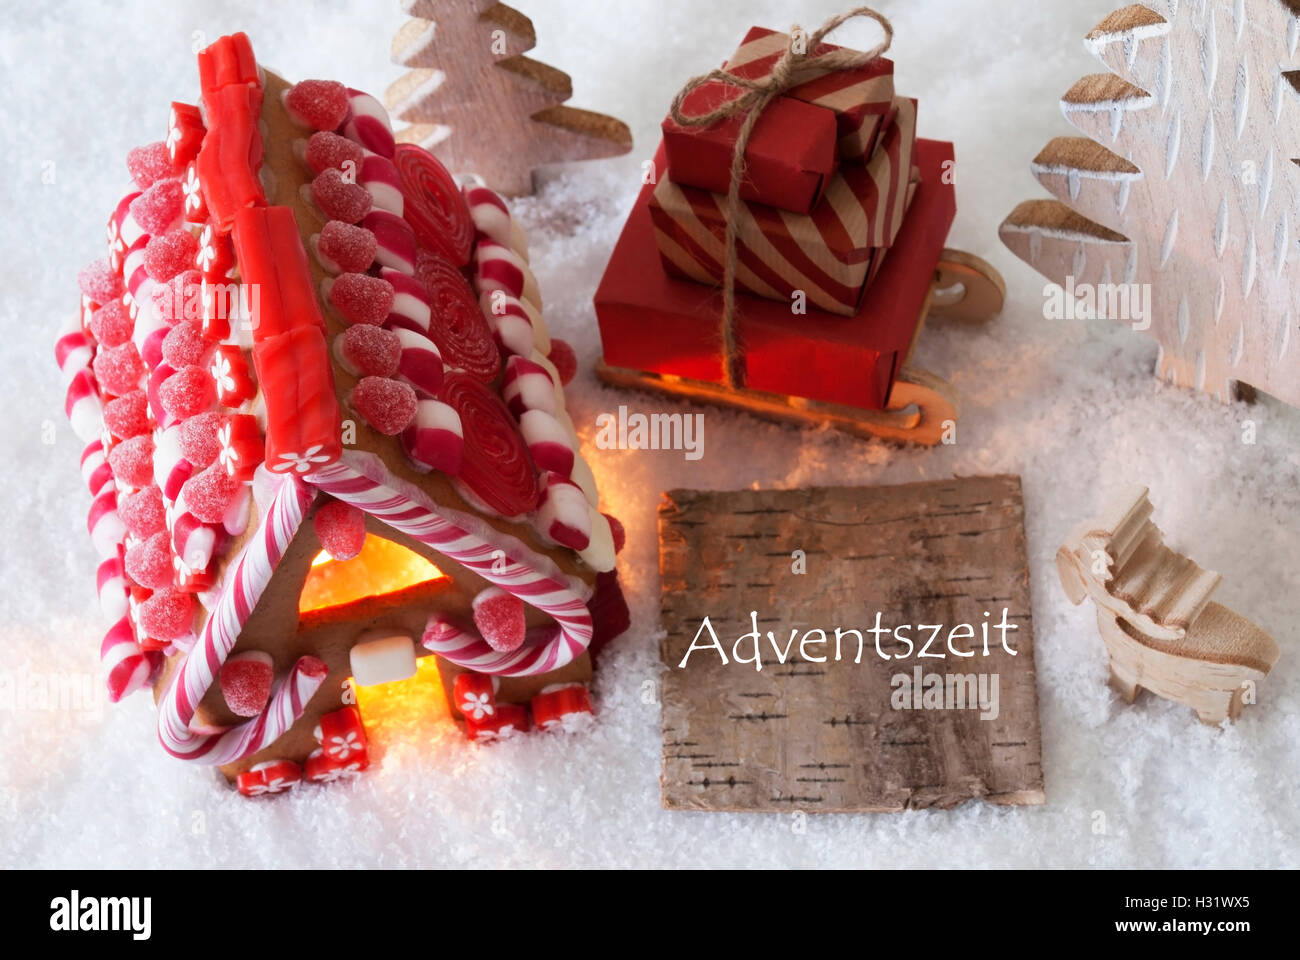 Gingerbread House, sled, neve Adventszeit significa tempo di Avvento Foto Stock